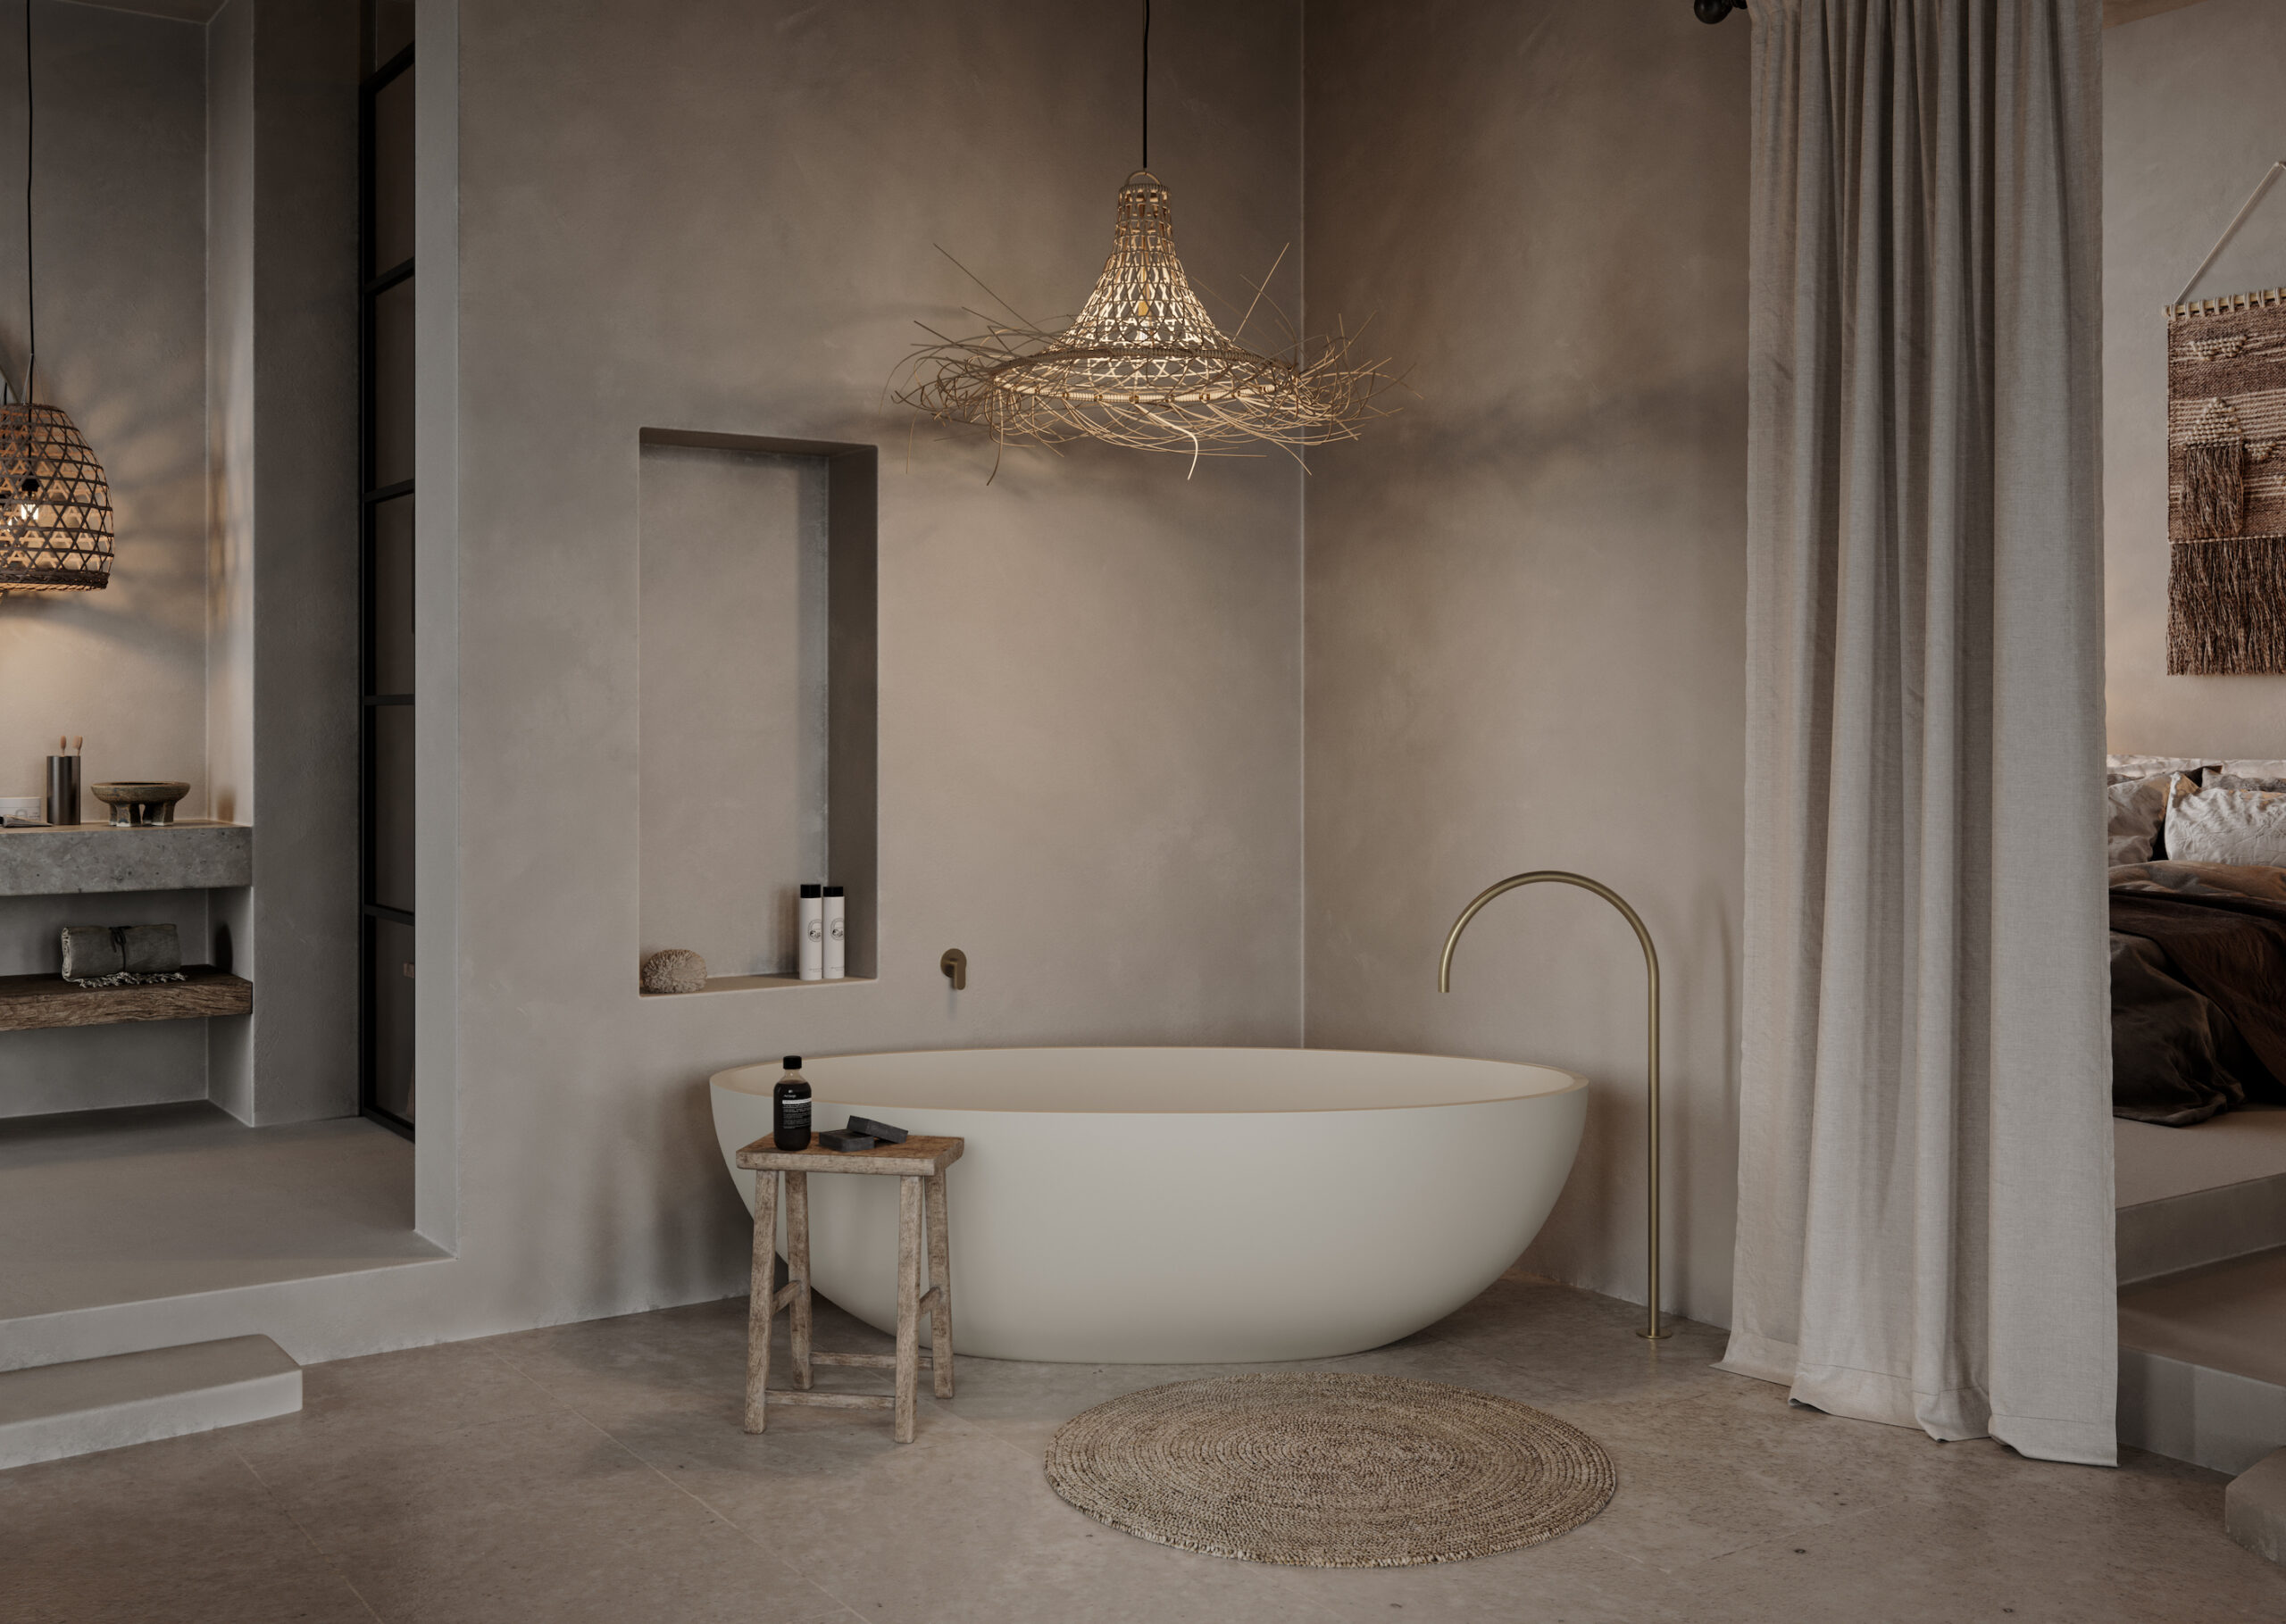 Bathroom Decor Ideas to Achieve a Spa-Like Sanctuary - Architexture  Furniture and Interior Design